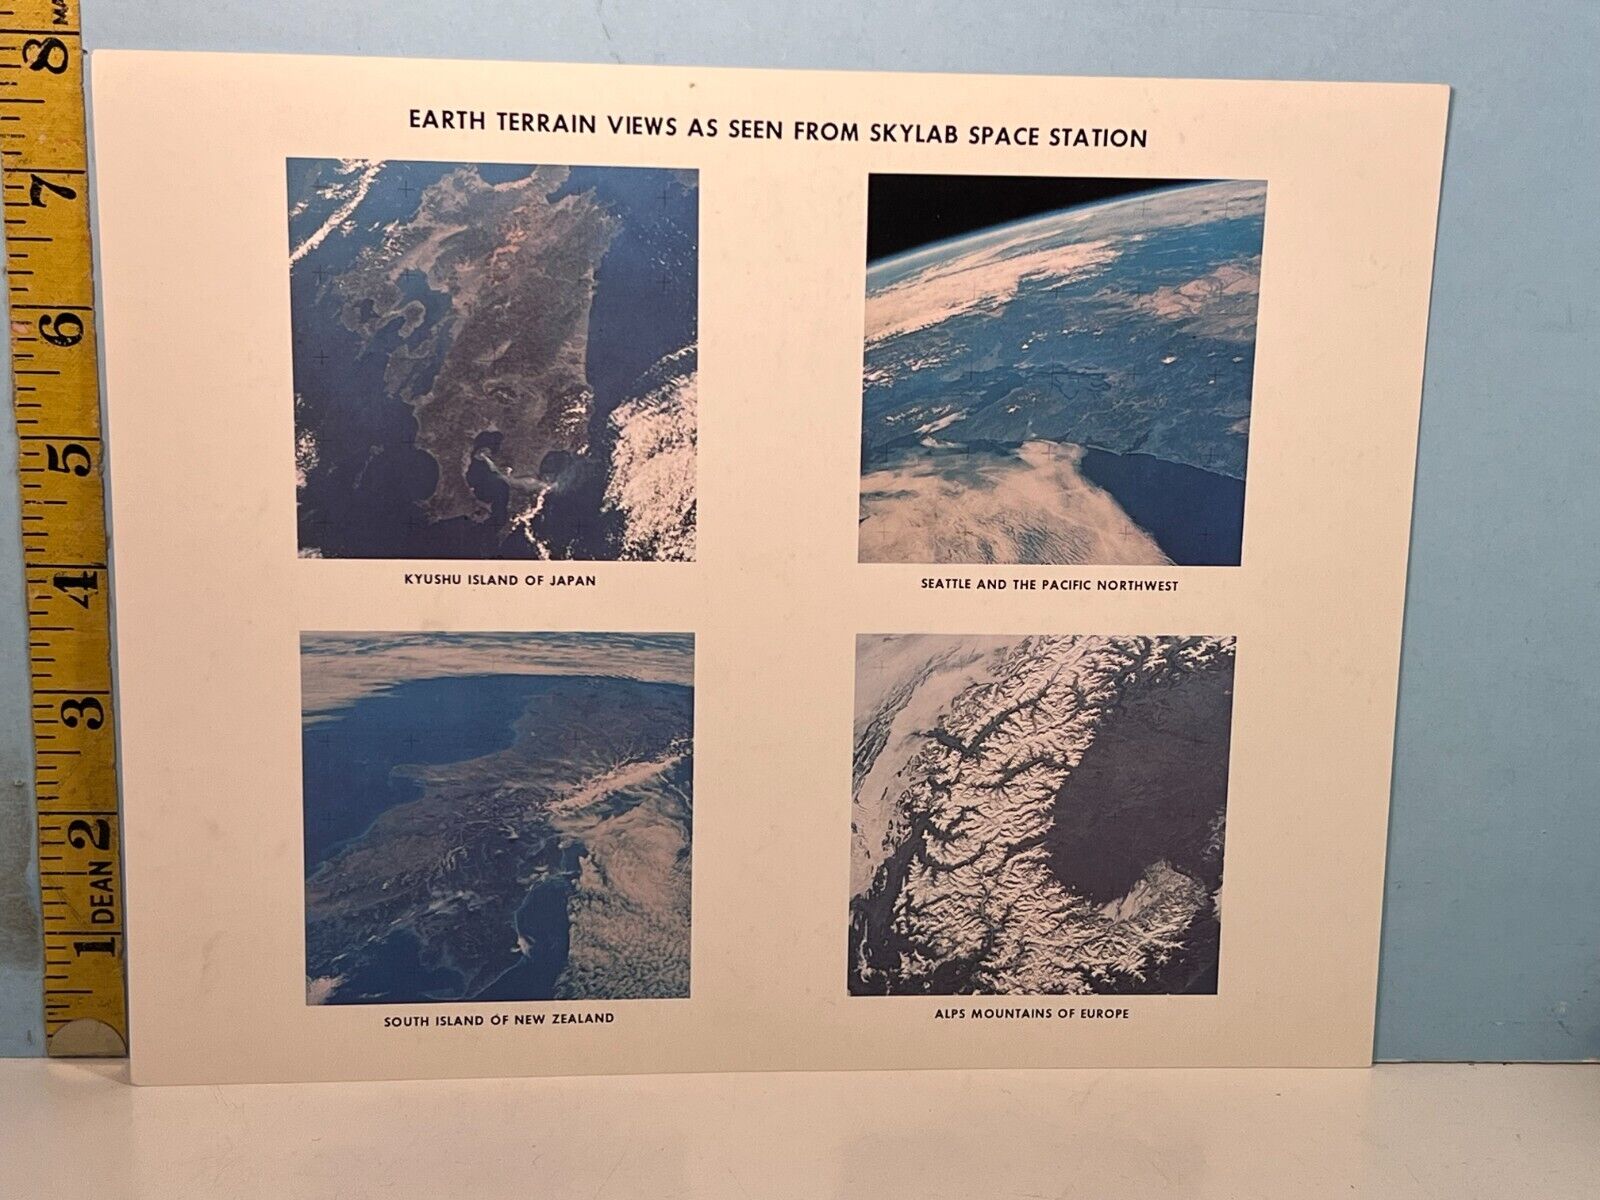 1974 NASA PHOTO: Earth Terrain as Seen from Skylab in Orbit